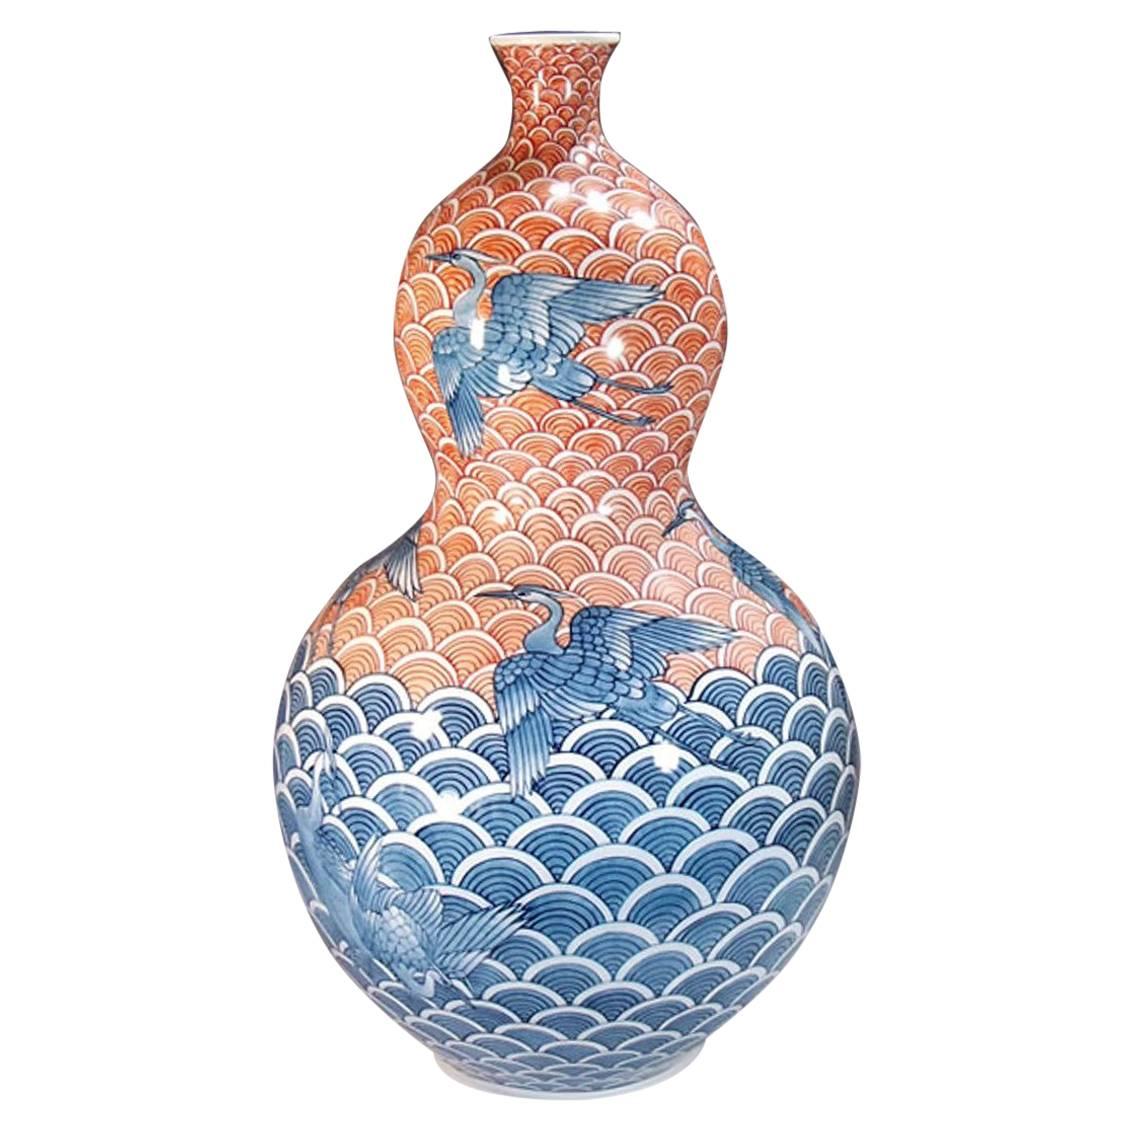 Japanese contemporary Blue Red Porcelain Vase by Master Artist, 2